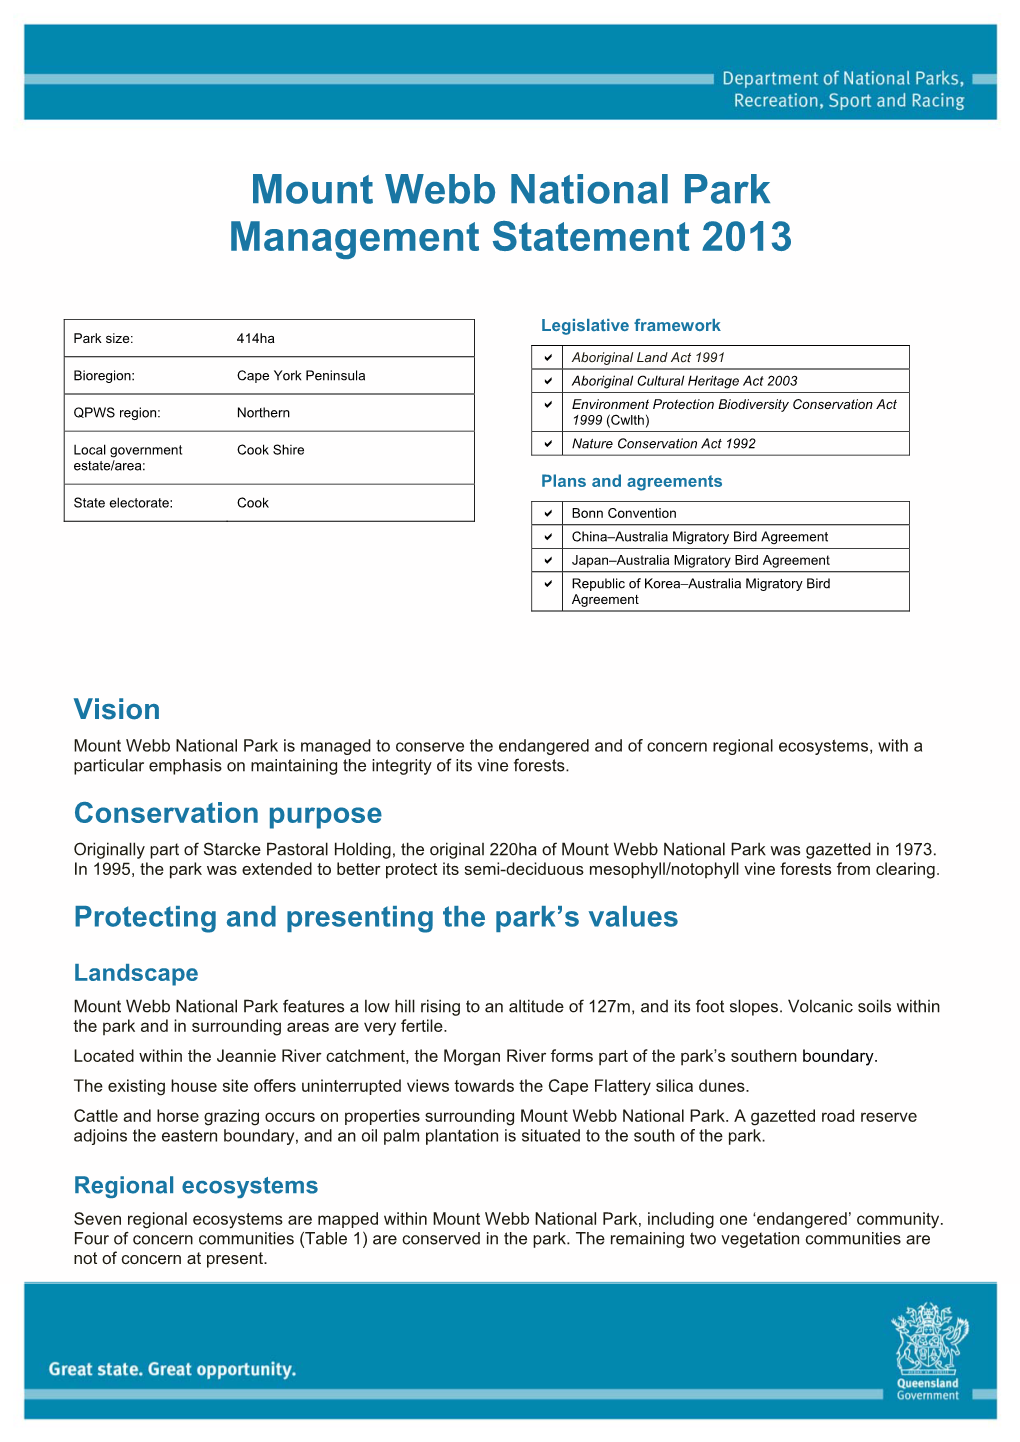 Mount Webb National Park Management Statement 2013